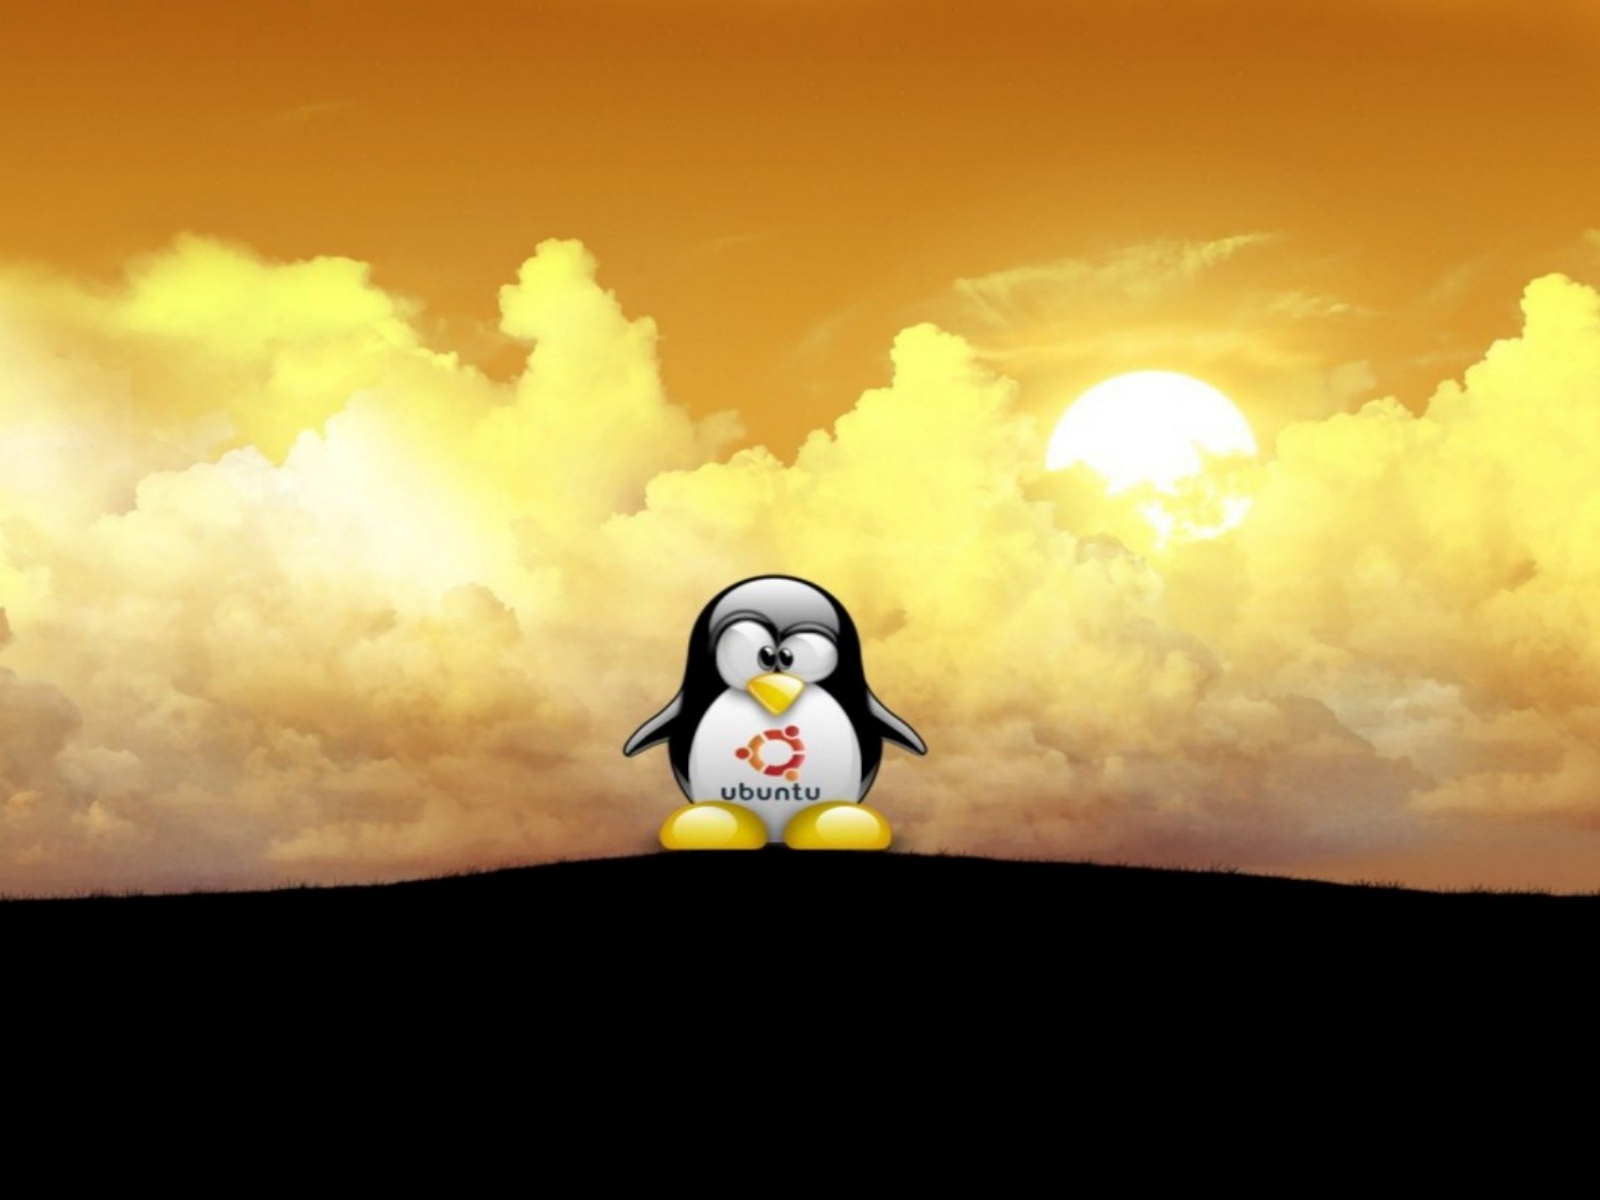 Best Friend Wallpaper For iPhone Penguin Ubuntu Tux